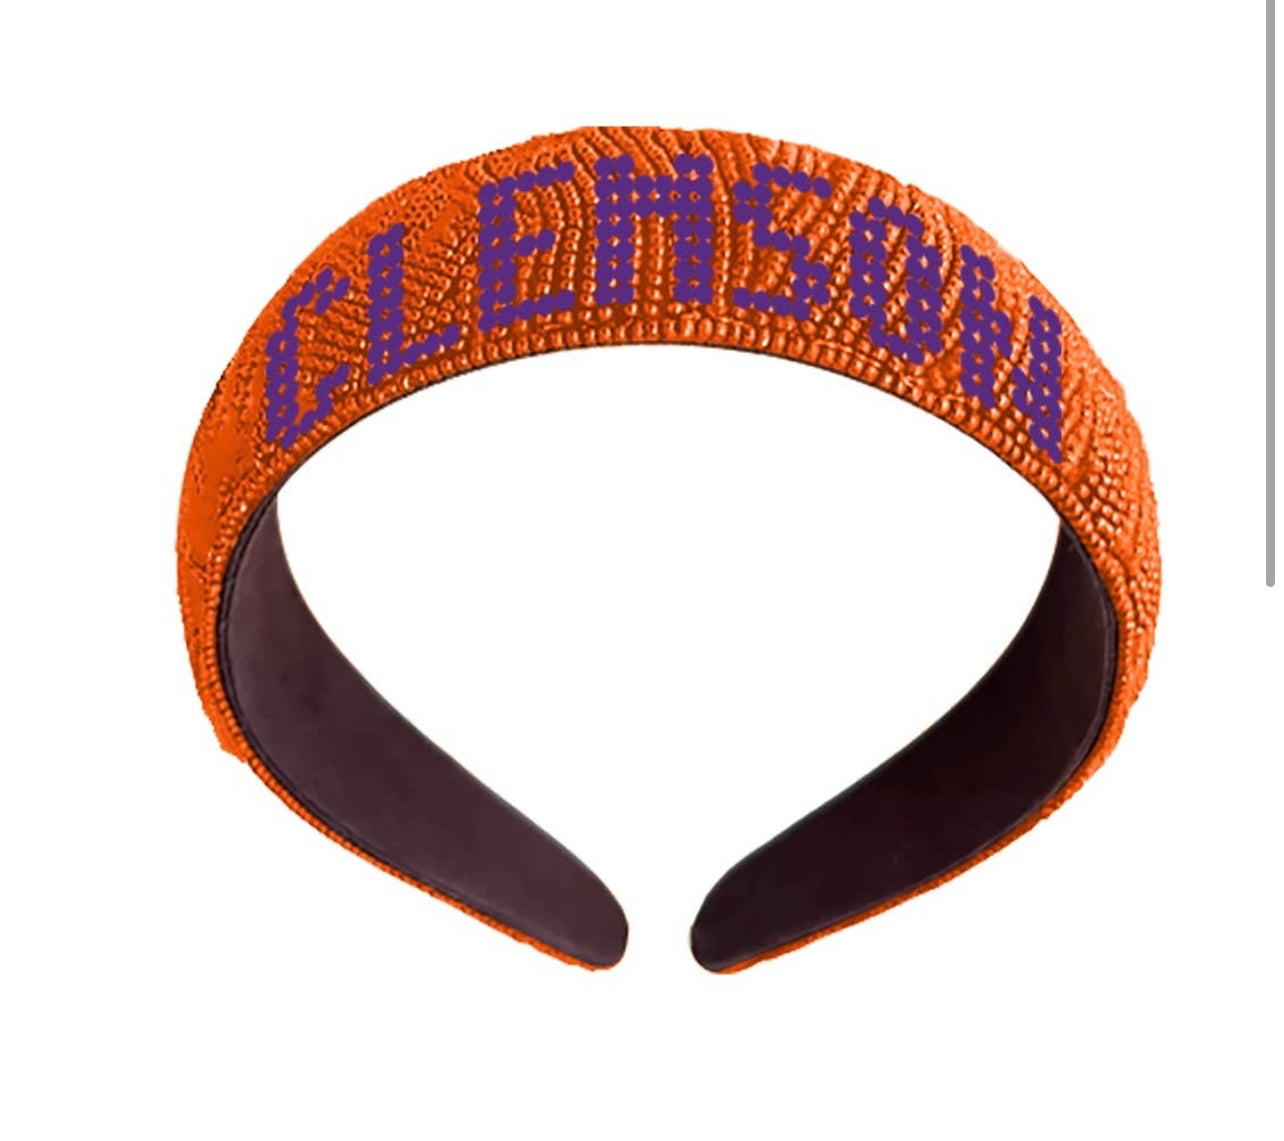 Orange and purple "Clemson" beaded headband.